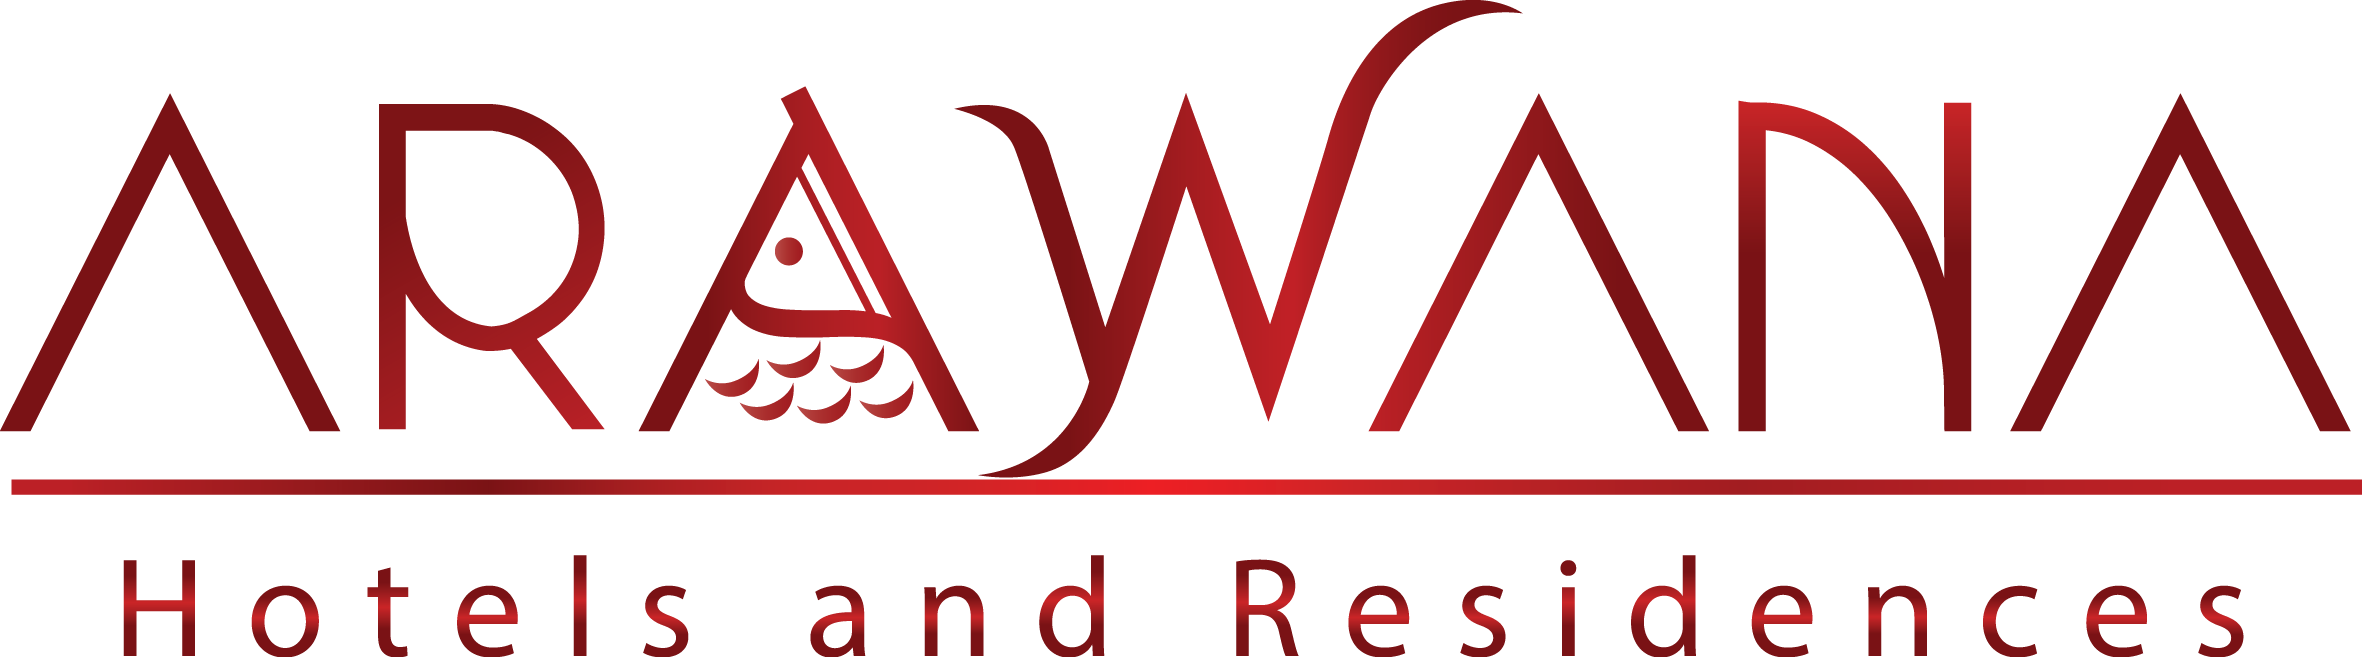 Bangkok Hotels & Residences by Arawana Group